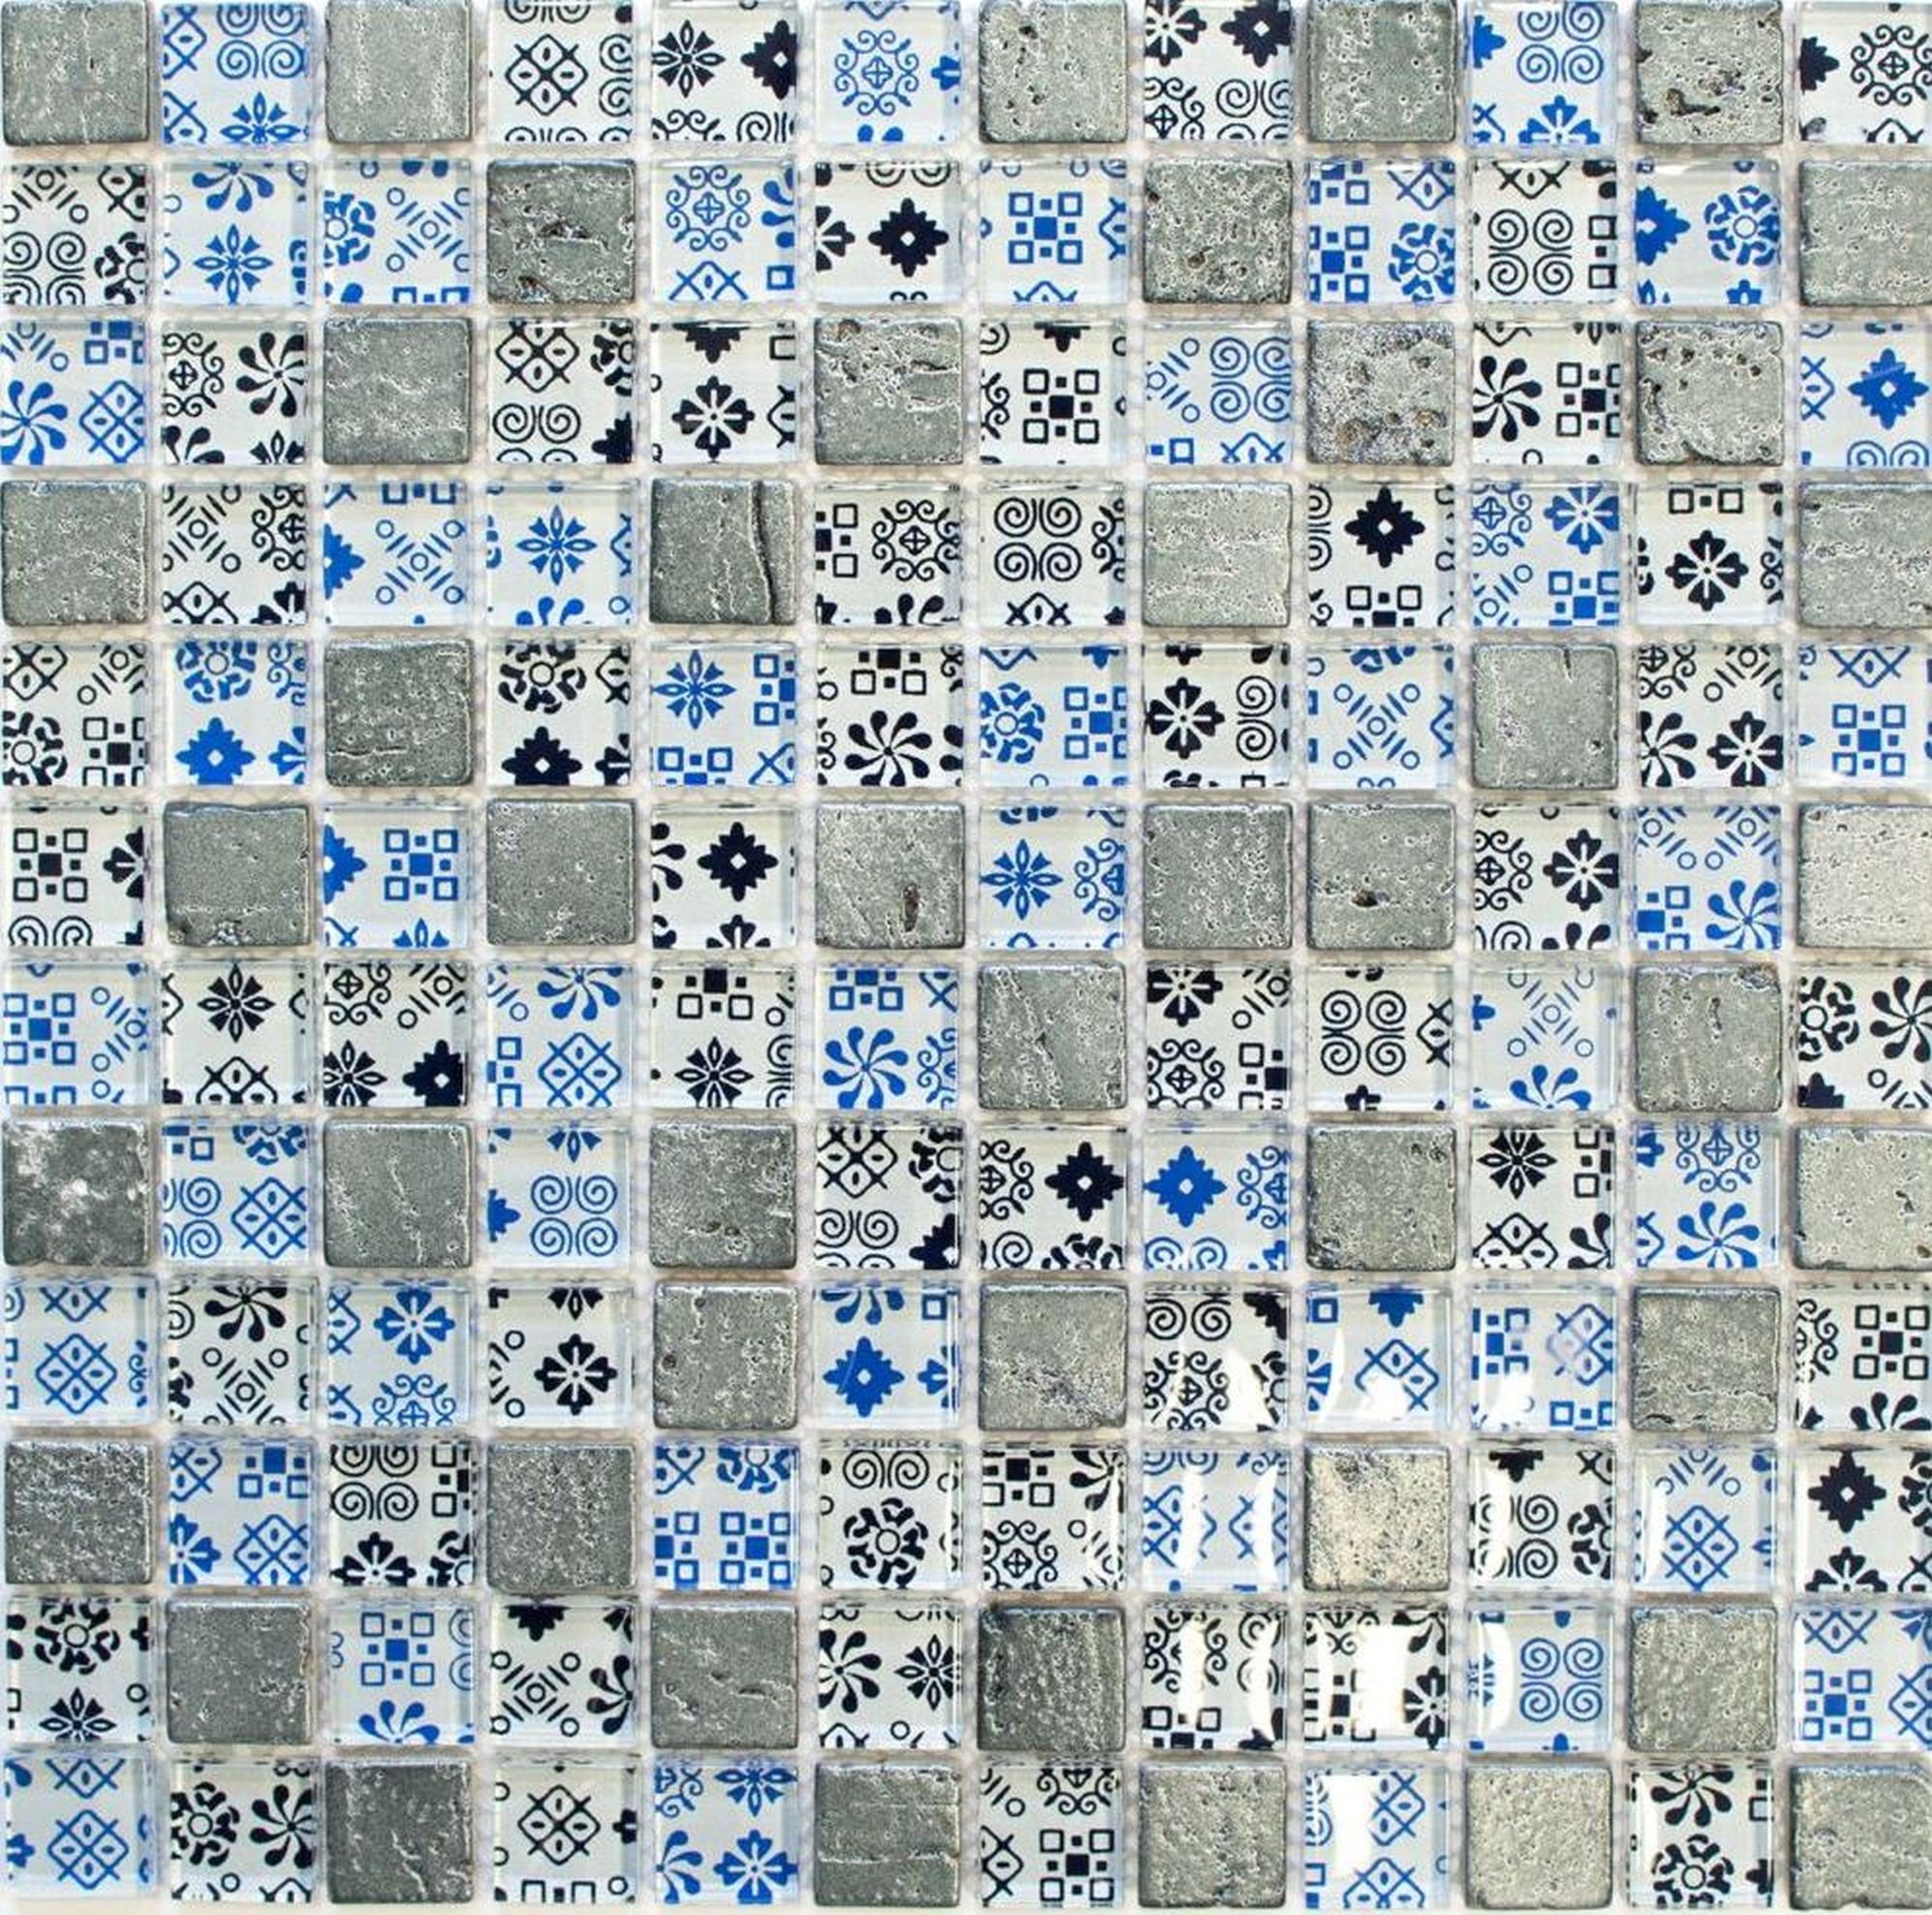 Mosani Mosaikfliesen Kunststein Rustikal Mosaikfliese Glasmosaik Resin blau schwarz